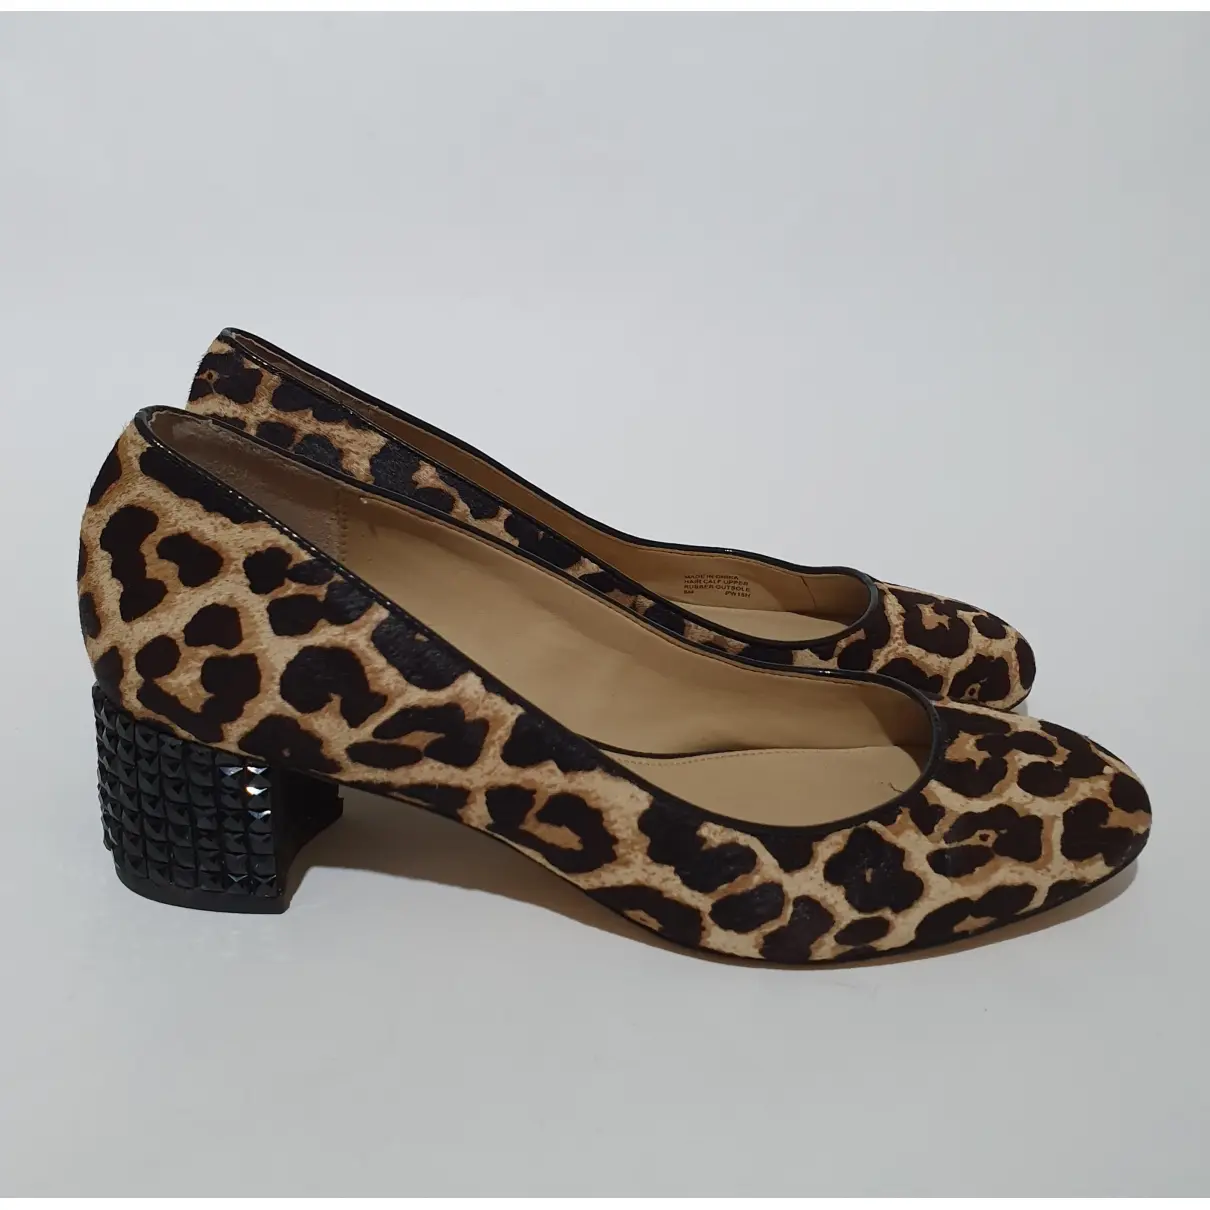 Michael Kors Pony-style calfskin heels for sale